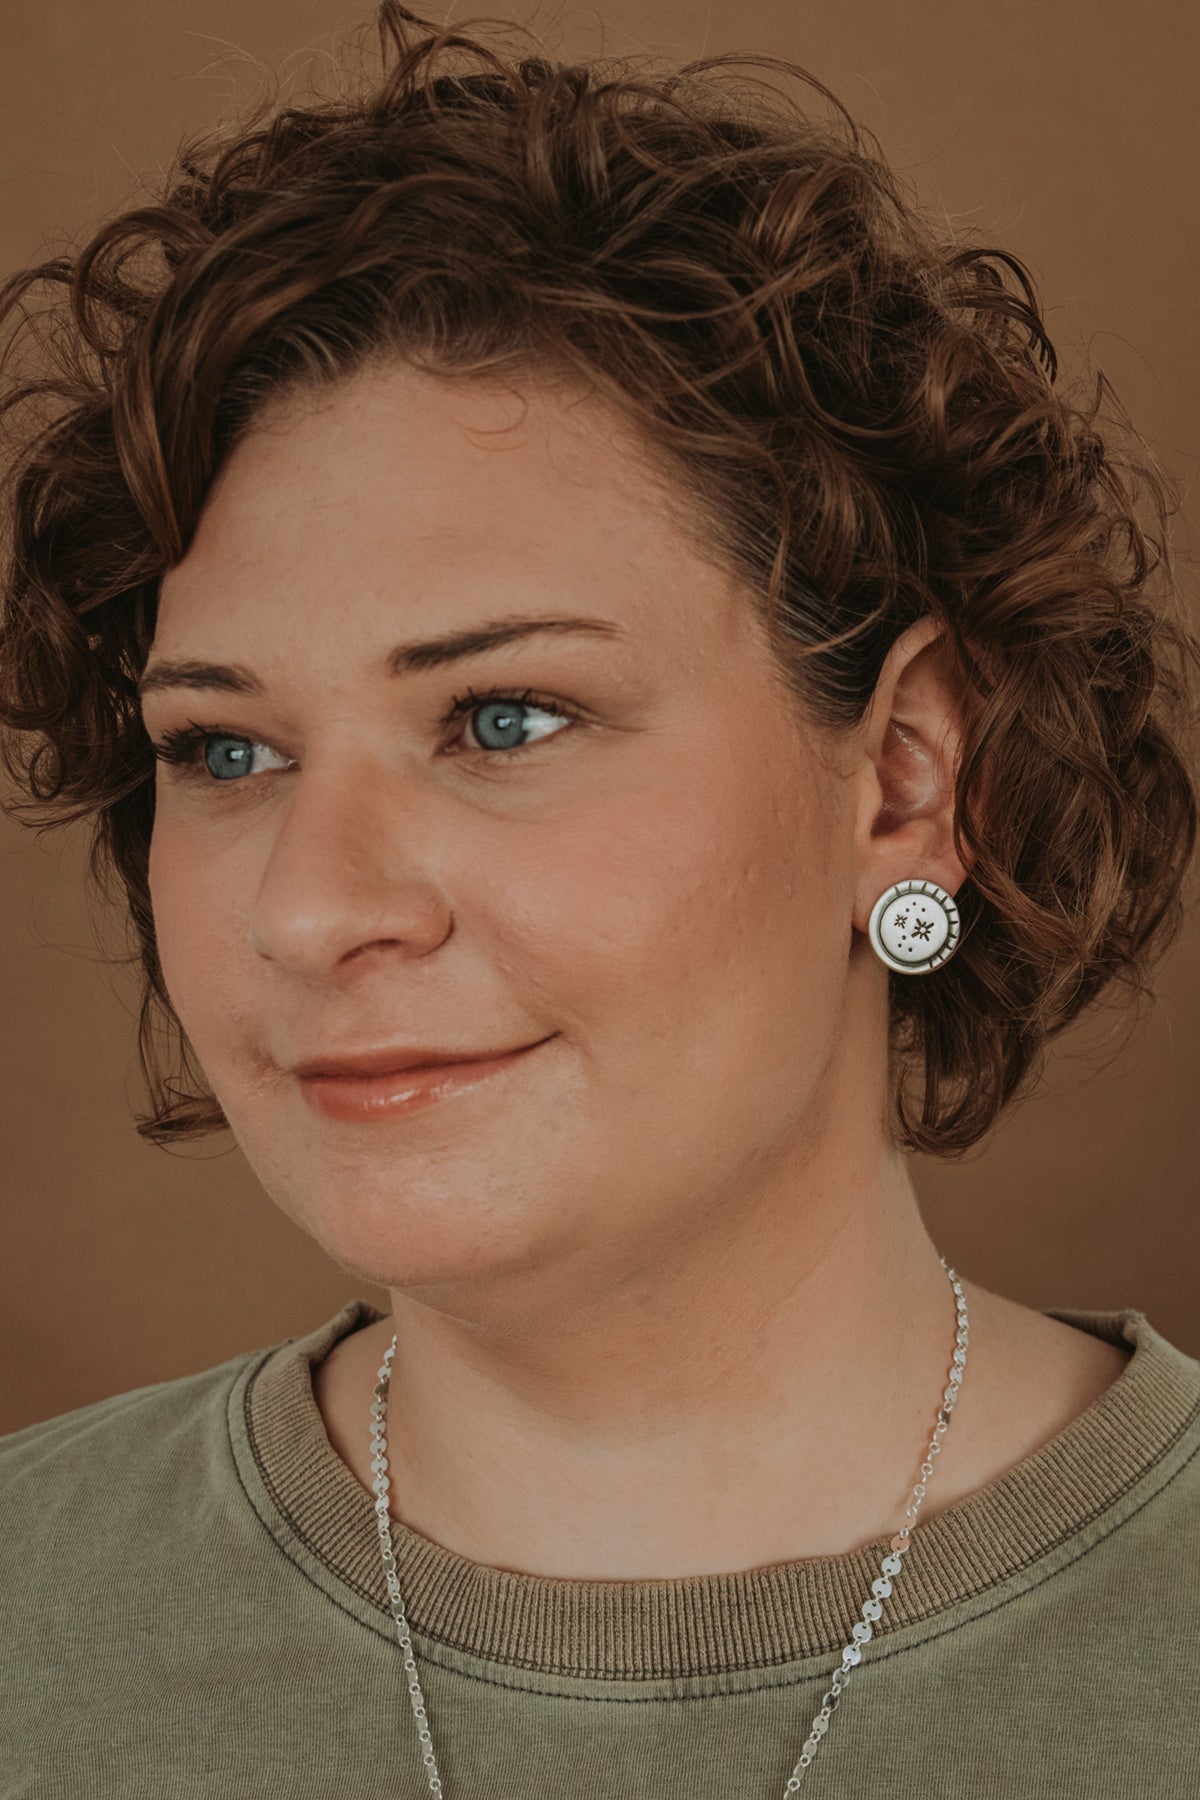 Cosmic Stud Earrings - MADE TO ORDER - Third Hand Silversmith handmade jewelry, Bozeman, Montana